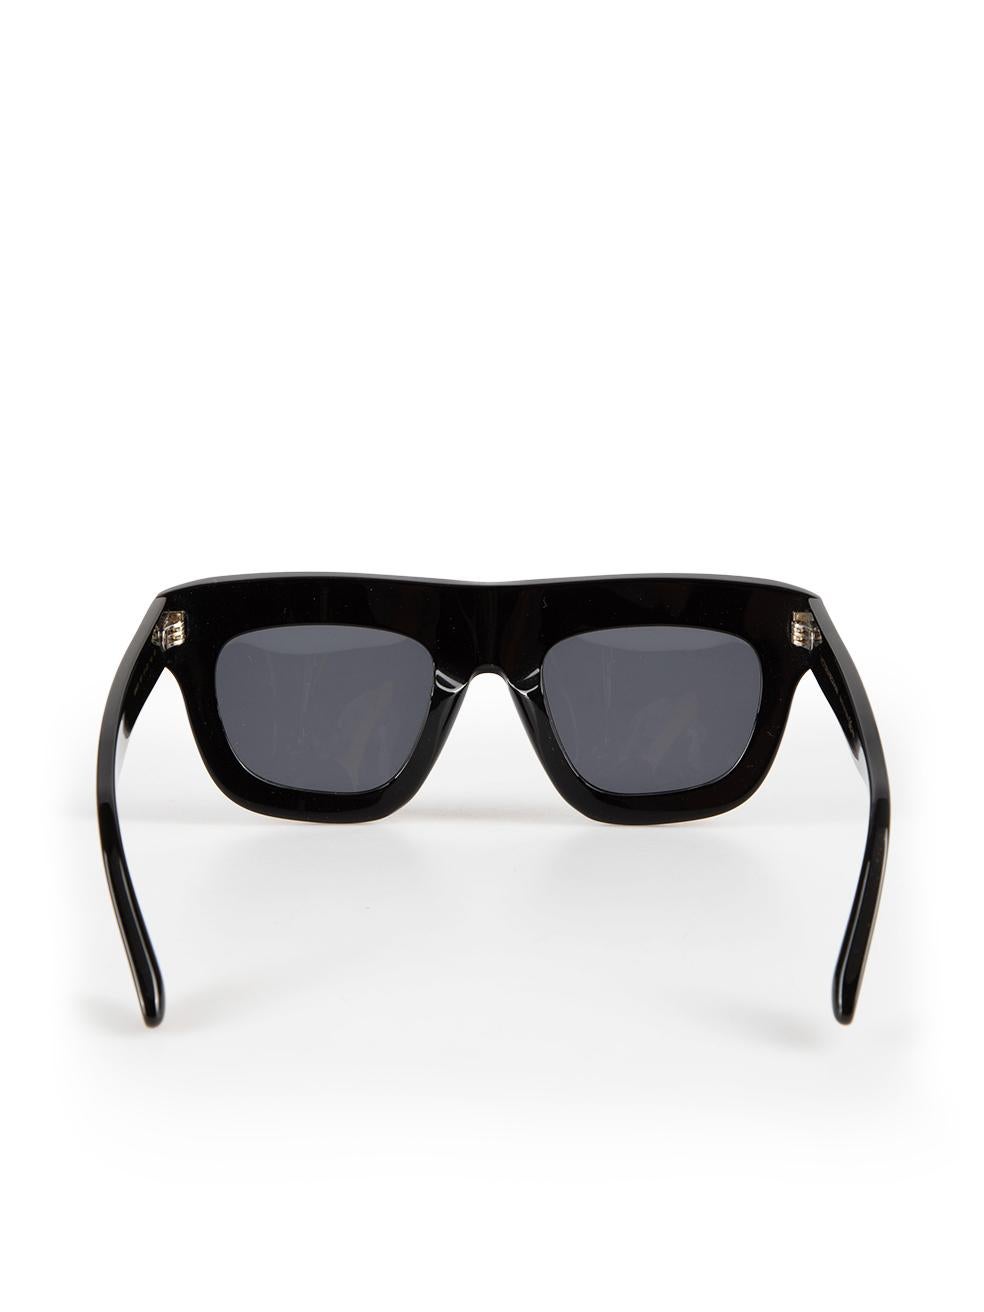 Women's Victoria Beckham Black Browline Tinted Sunglasses For Sale